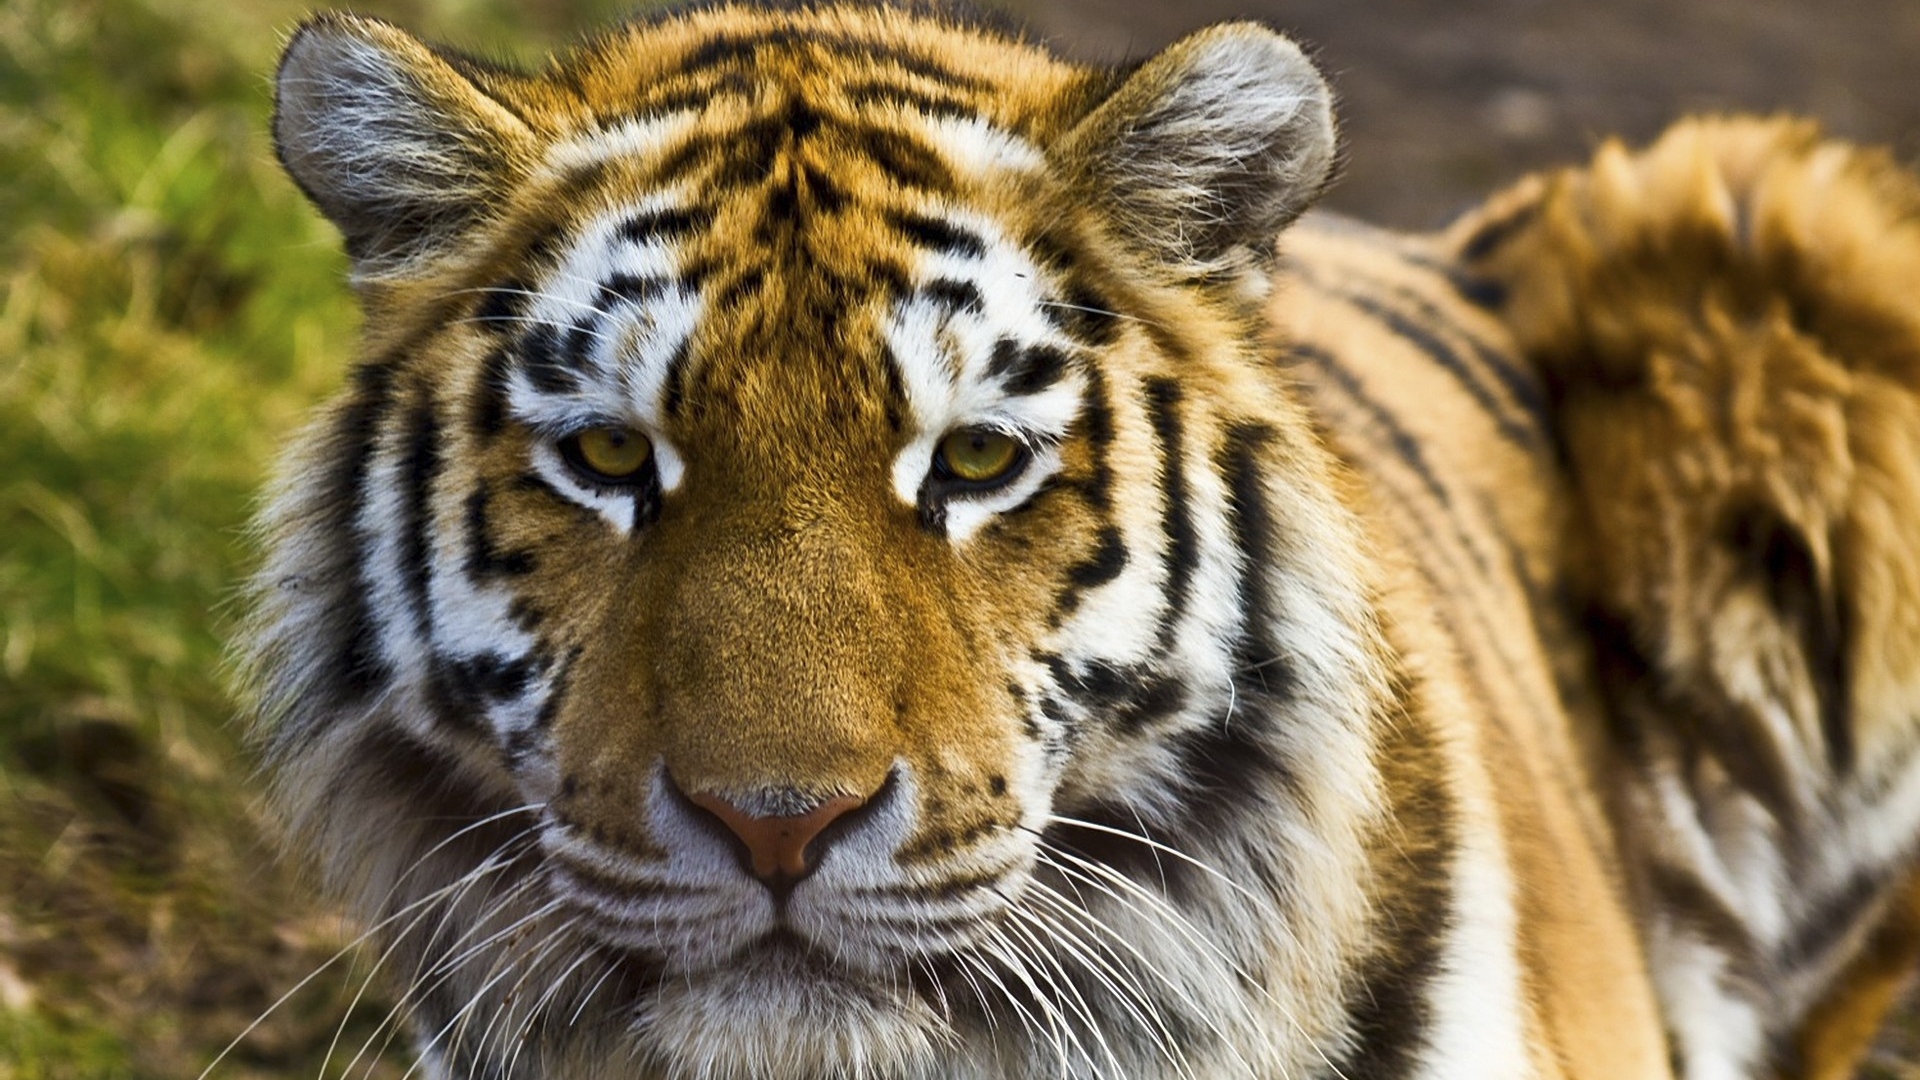 Wallpaper Tiger Face Striped Big Cat Full HD 1080p